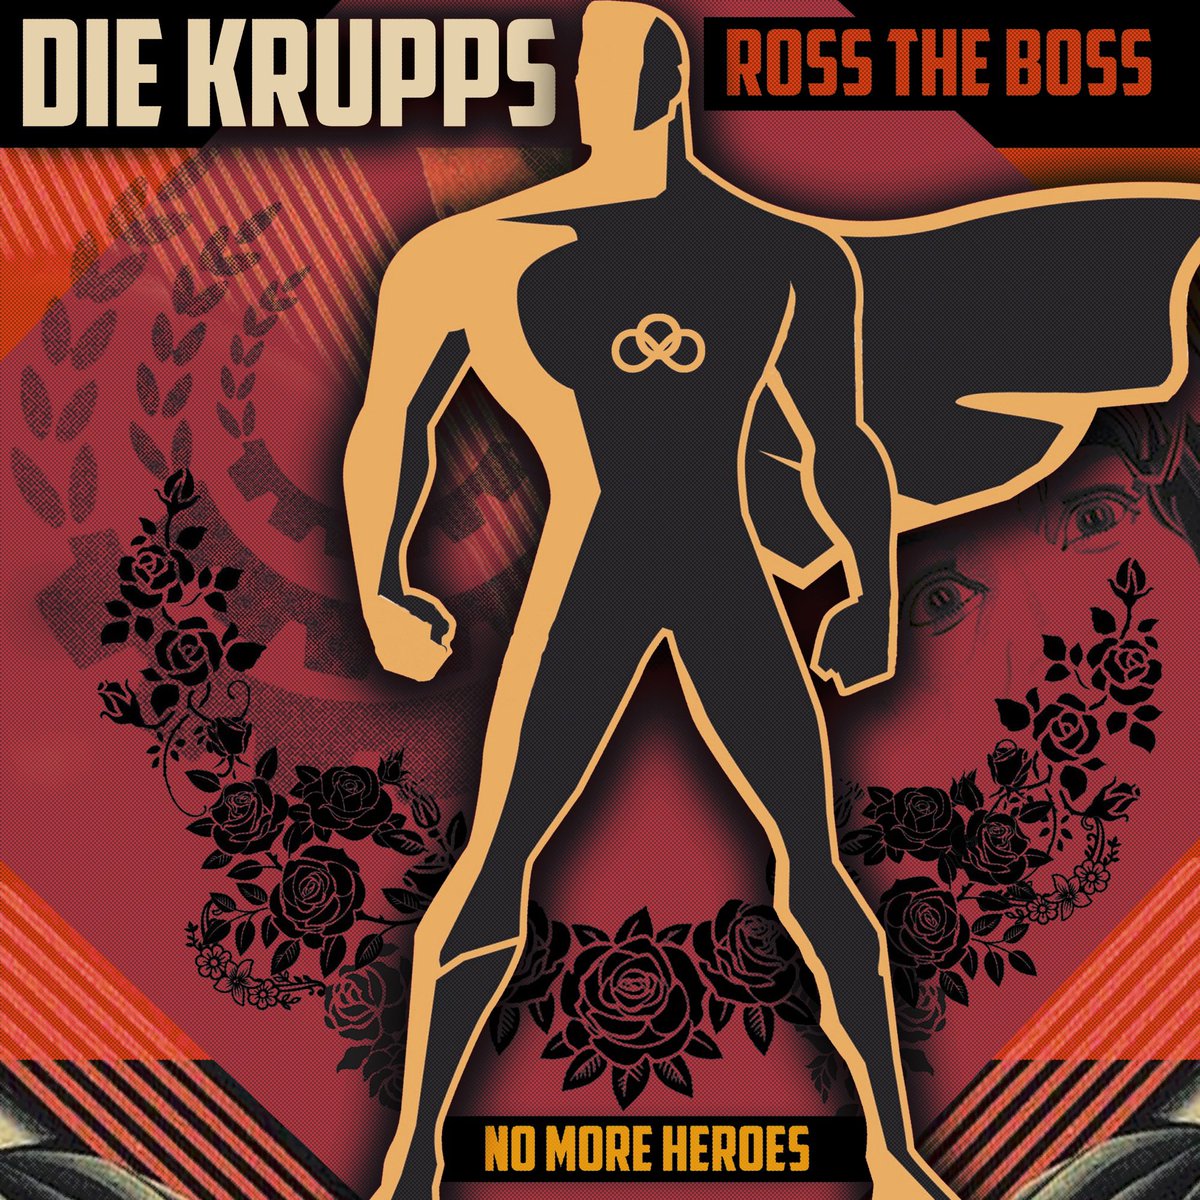 #NowPlaying 48kHz No More Heroes by Die Krupps & Ross the Boss on #ONKYO #MaidenAudioApp
#diekrupps